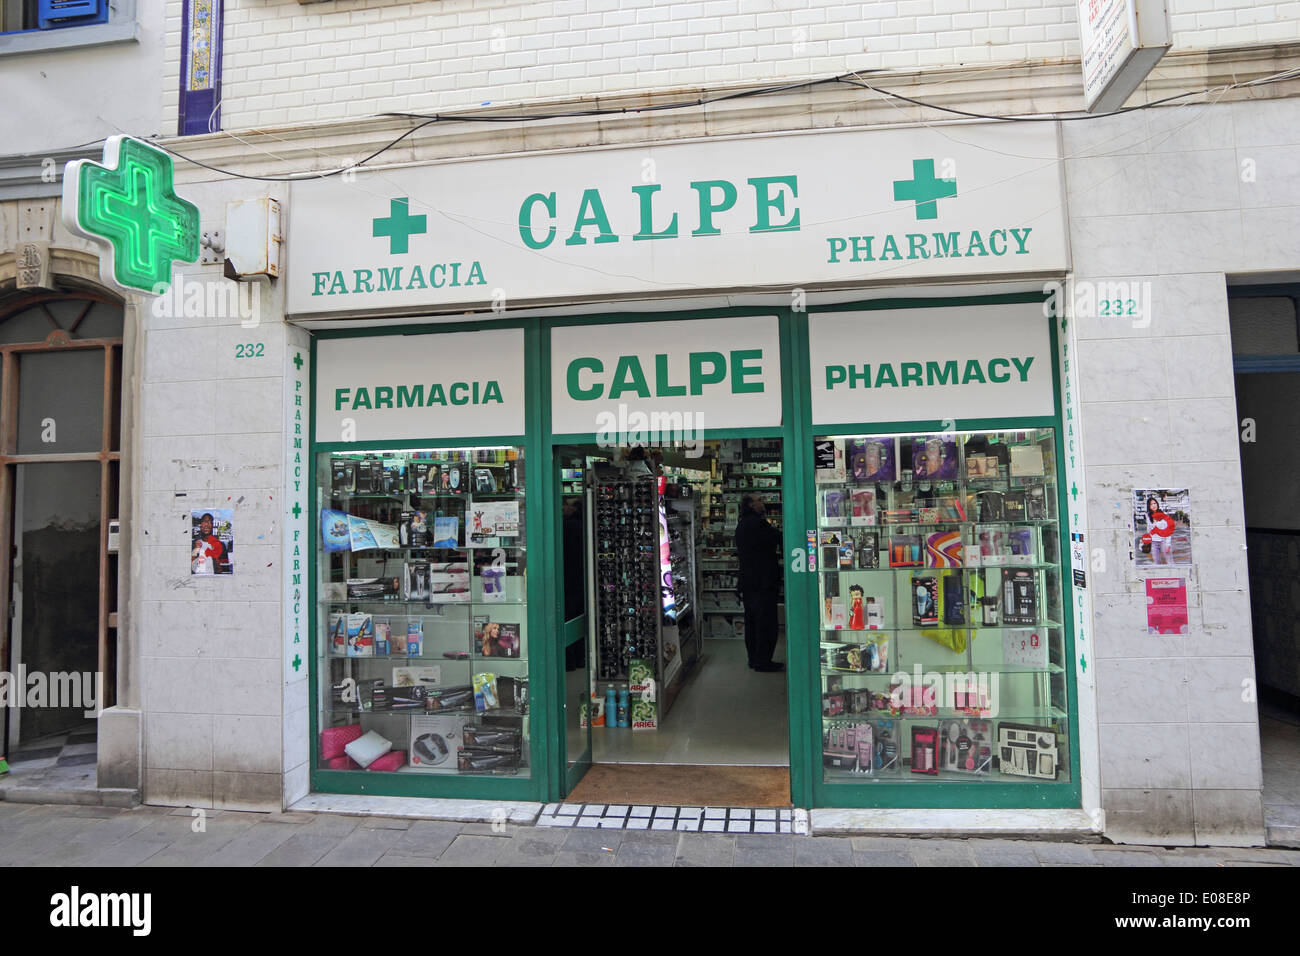 Calpe pharmacy, Gibraltar Stock Photo